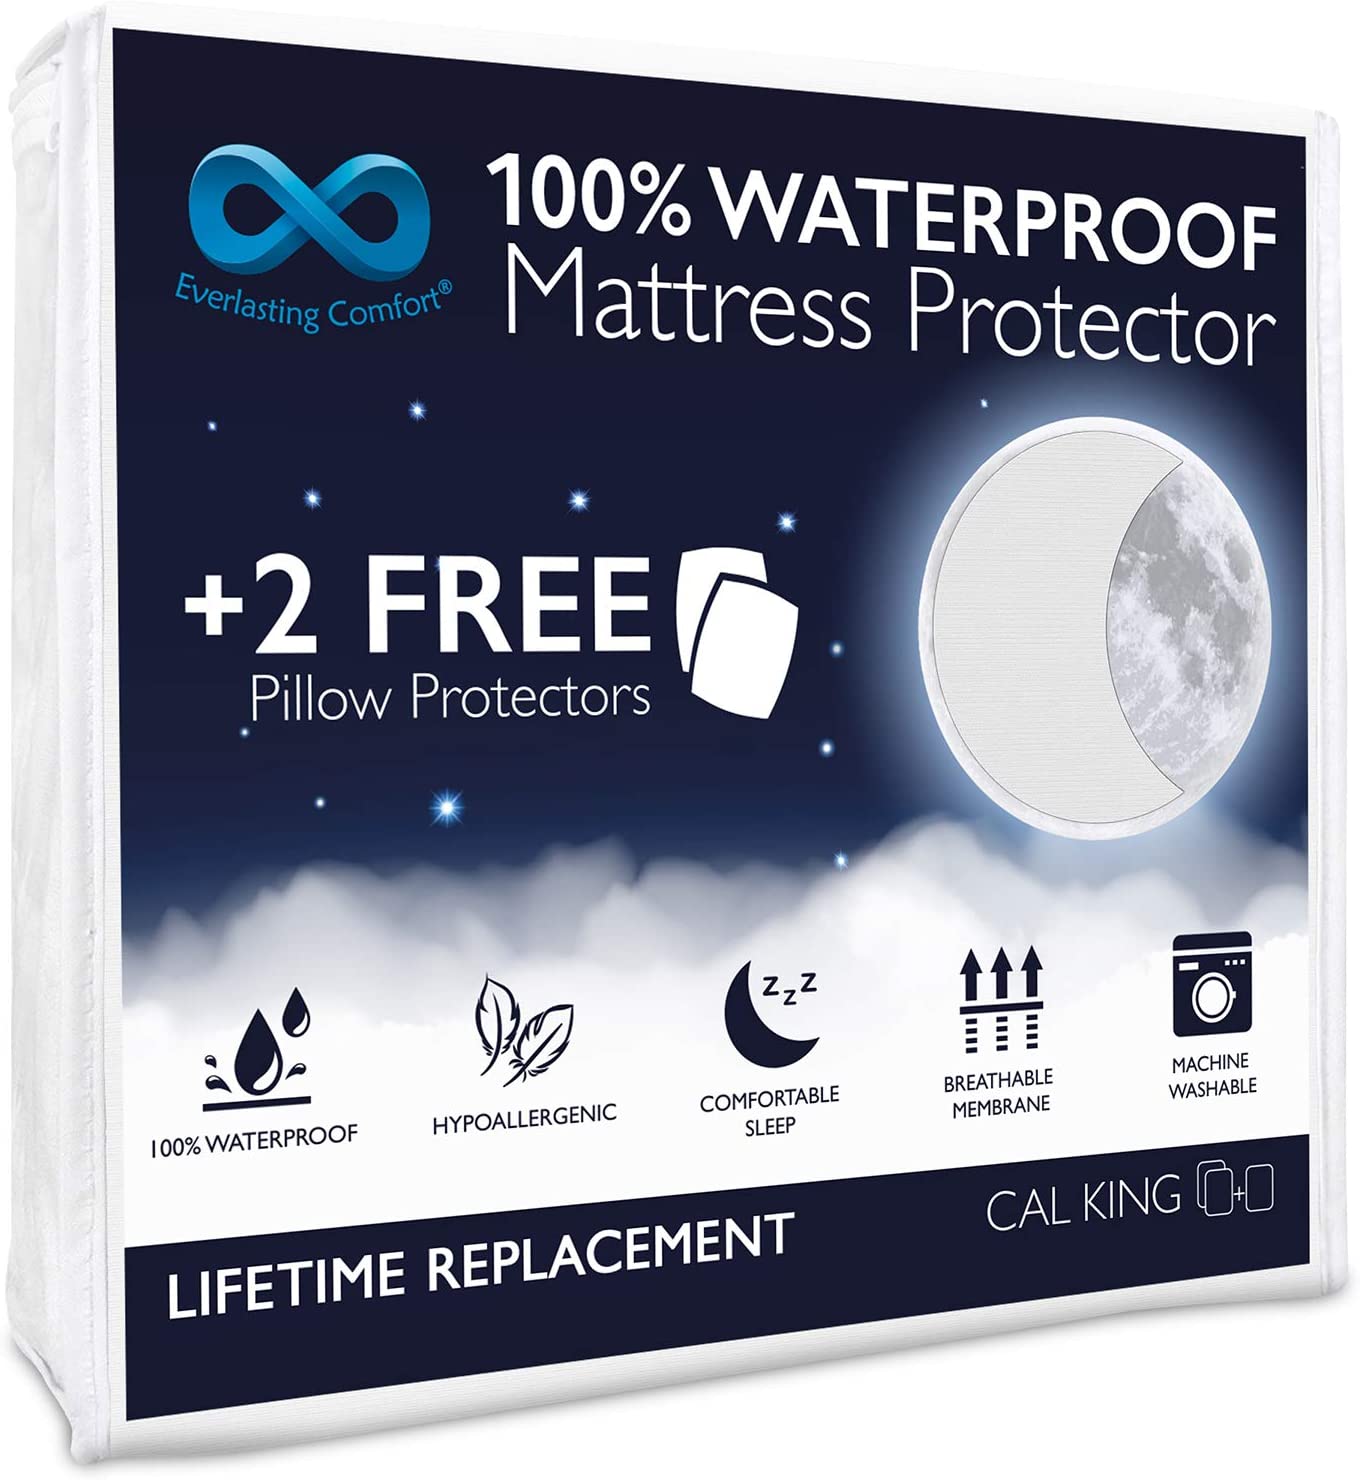 Everlasting Comfort Free Mattress Protector